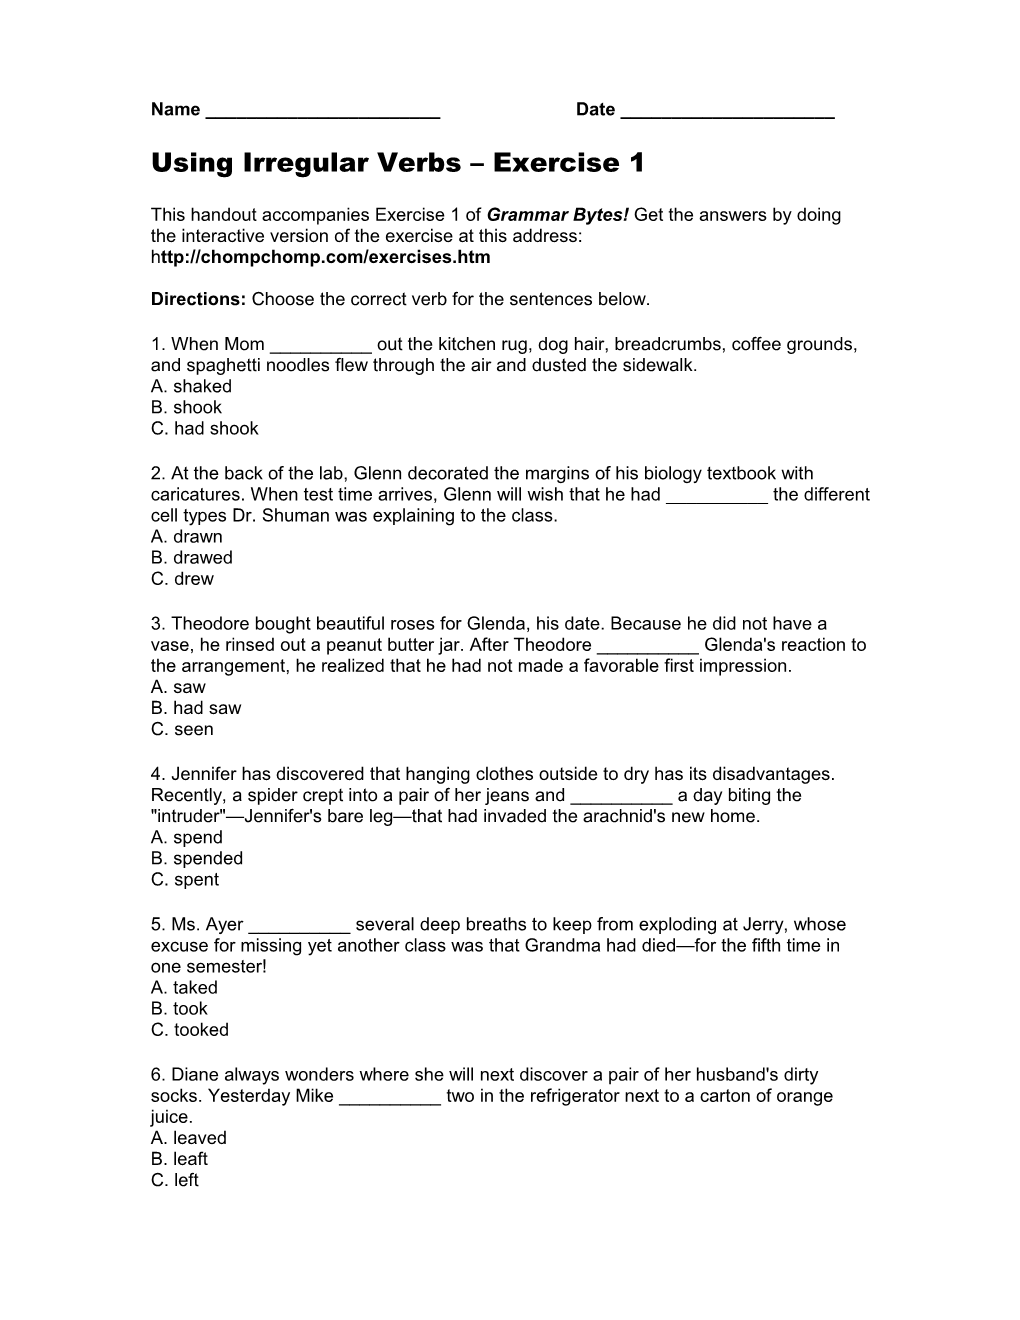 Using Irregular Verbs Exercise 1